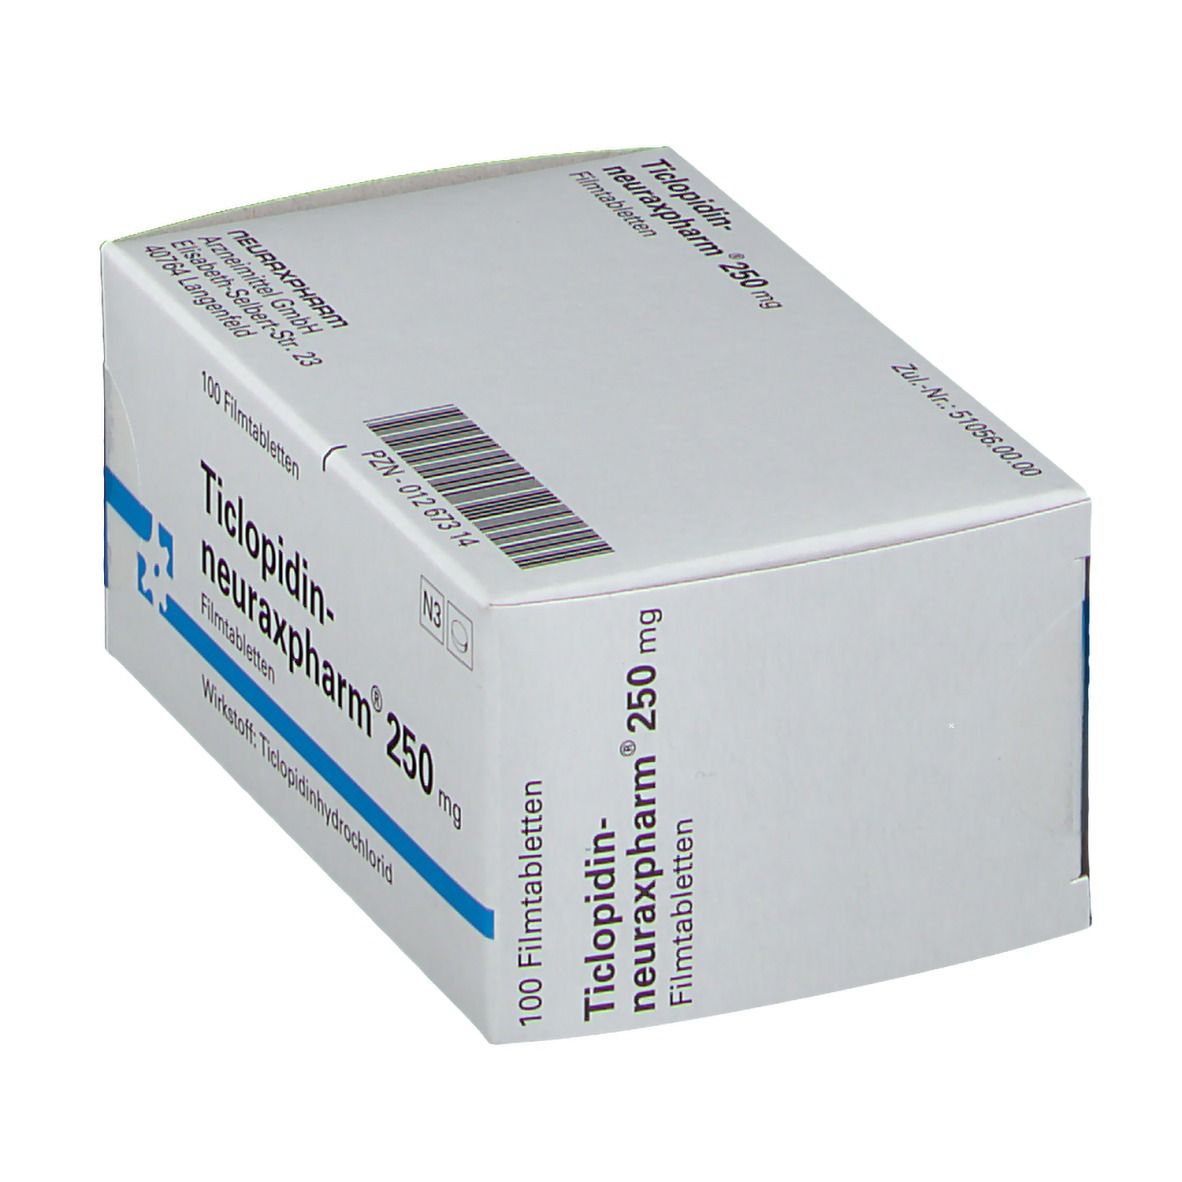 Ticlopidin-neuraxpharm® 250 mg